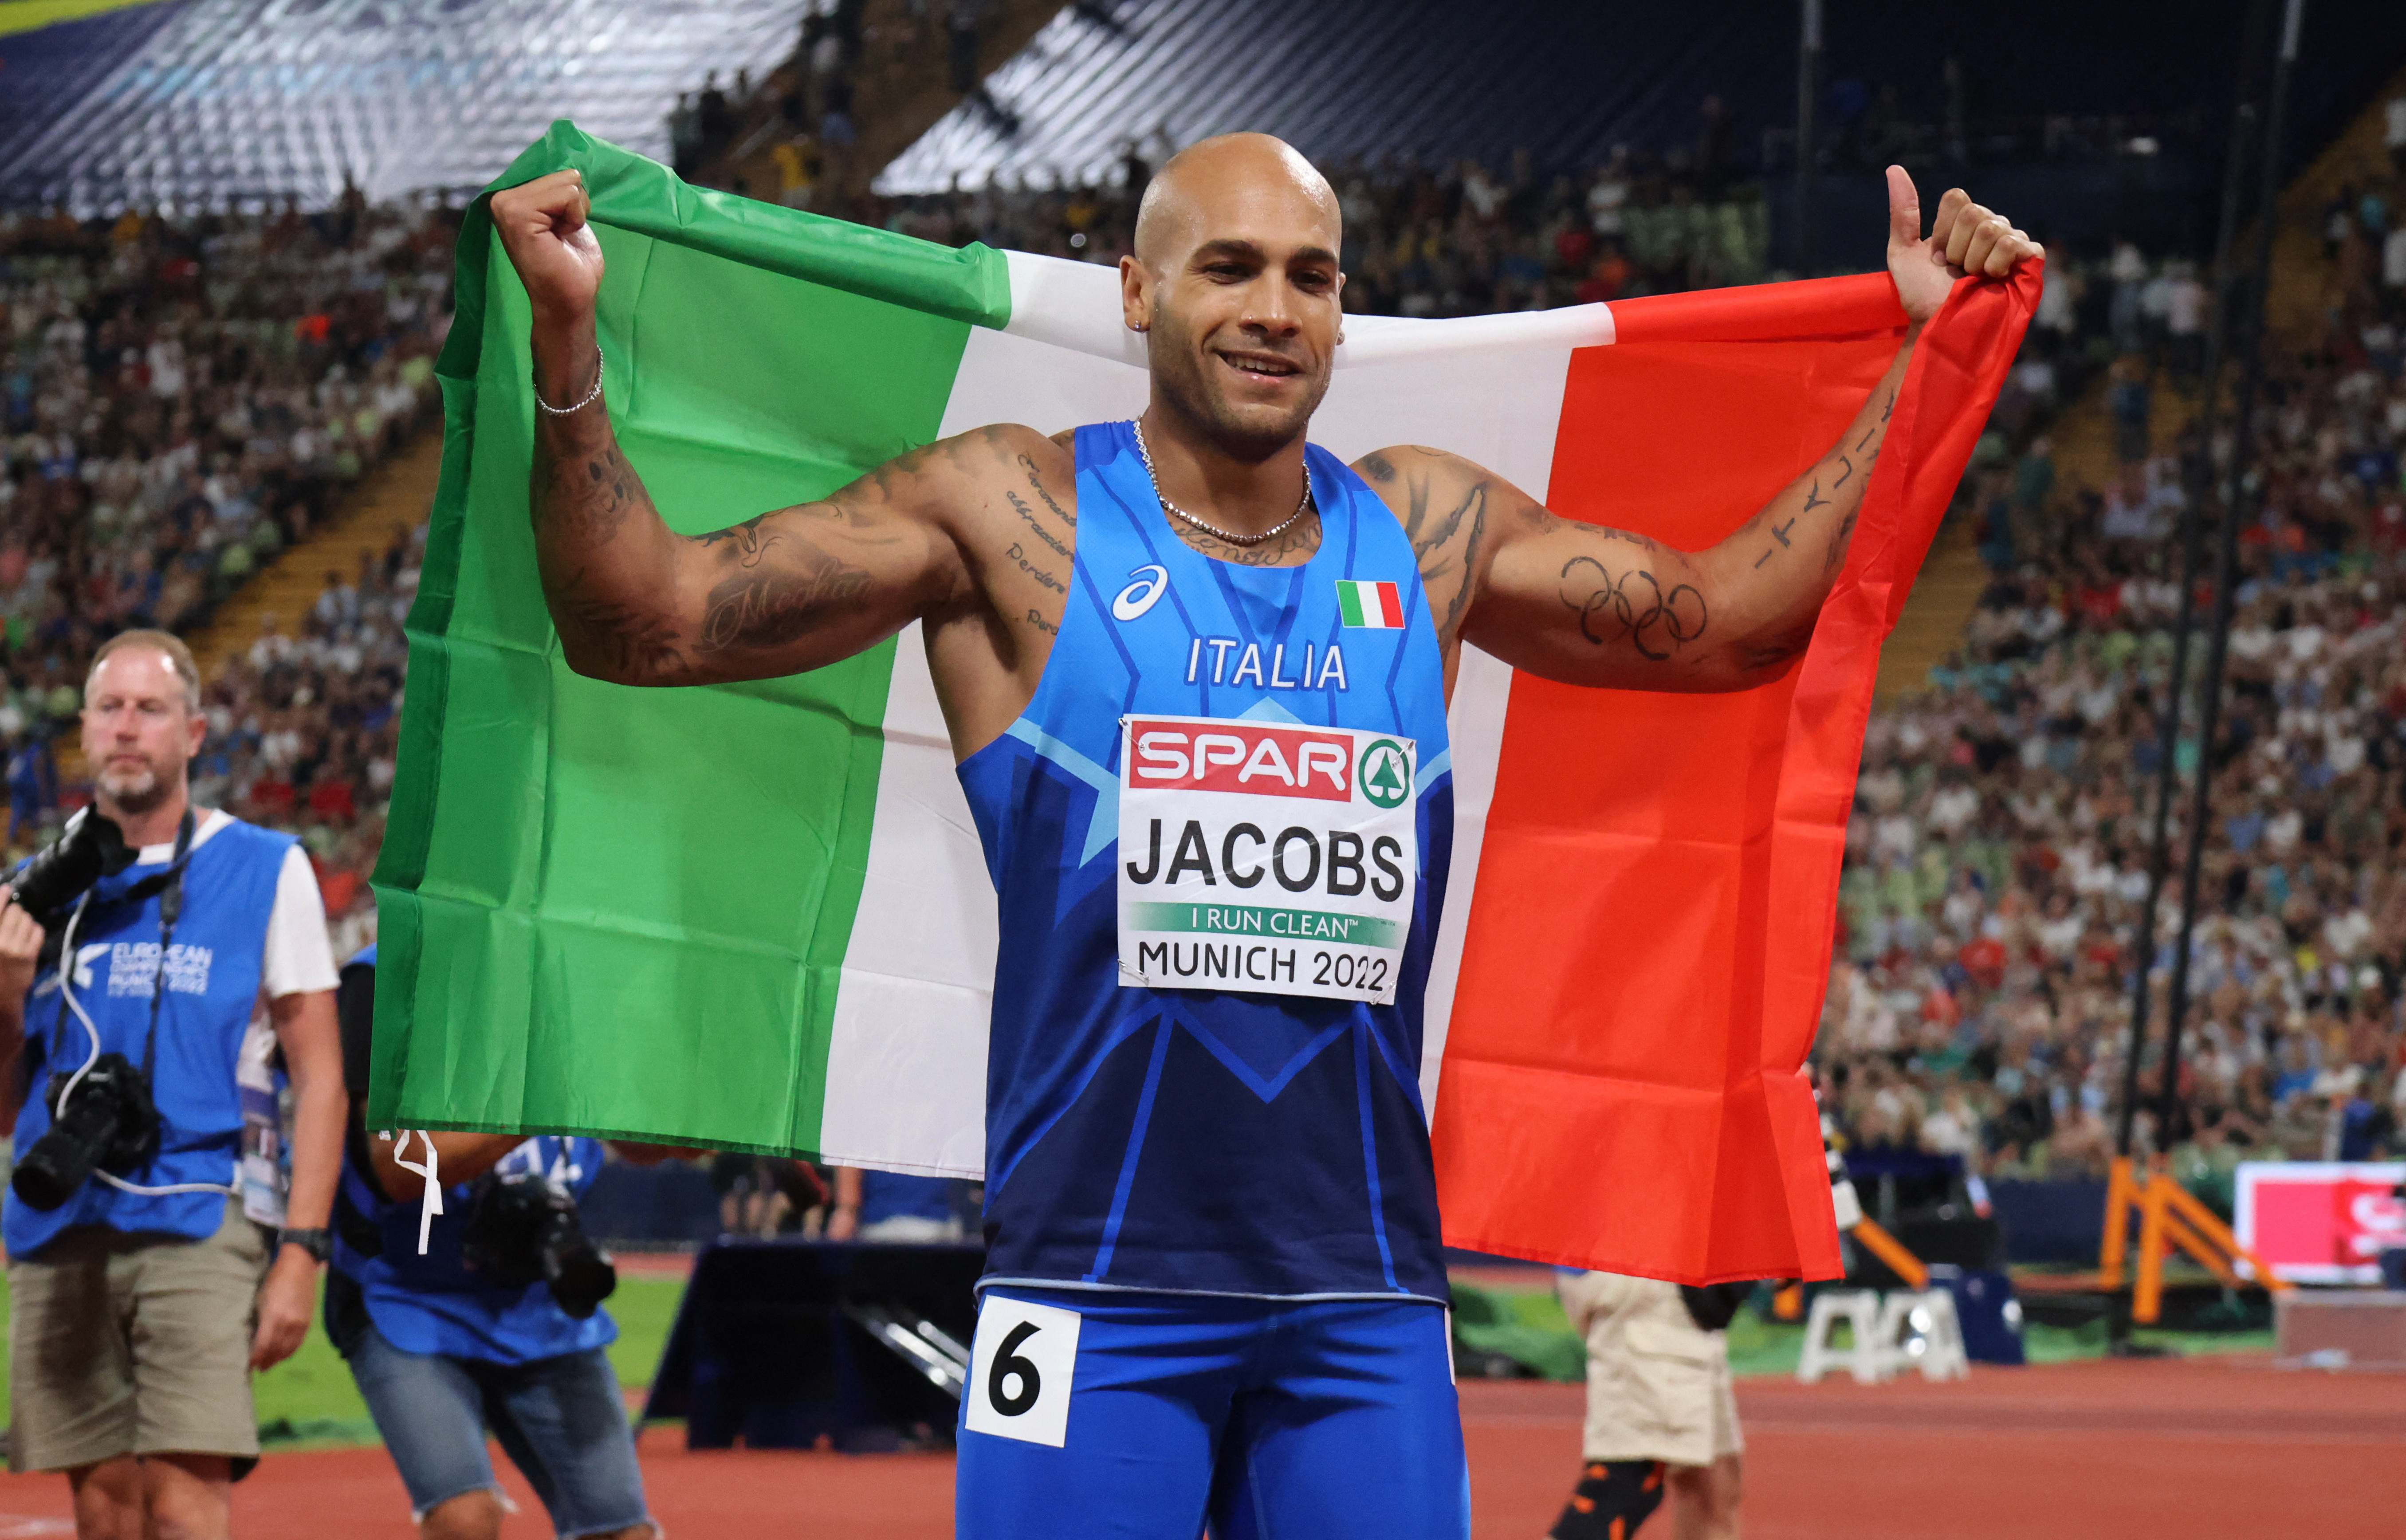 Italian Olympic champion Jacobs, German Luckenkemper, win 100-meter titles at European Athletics Championships